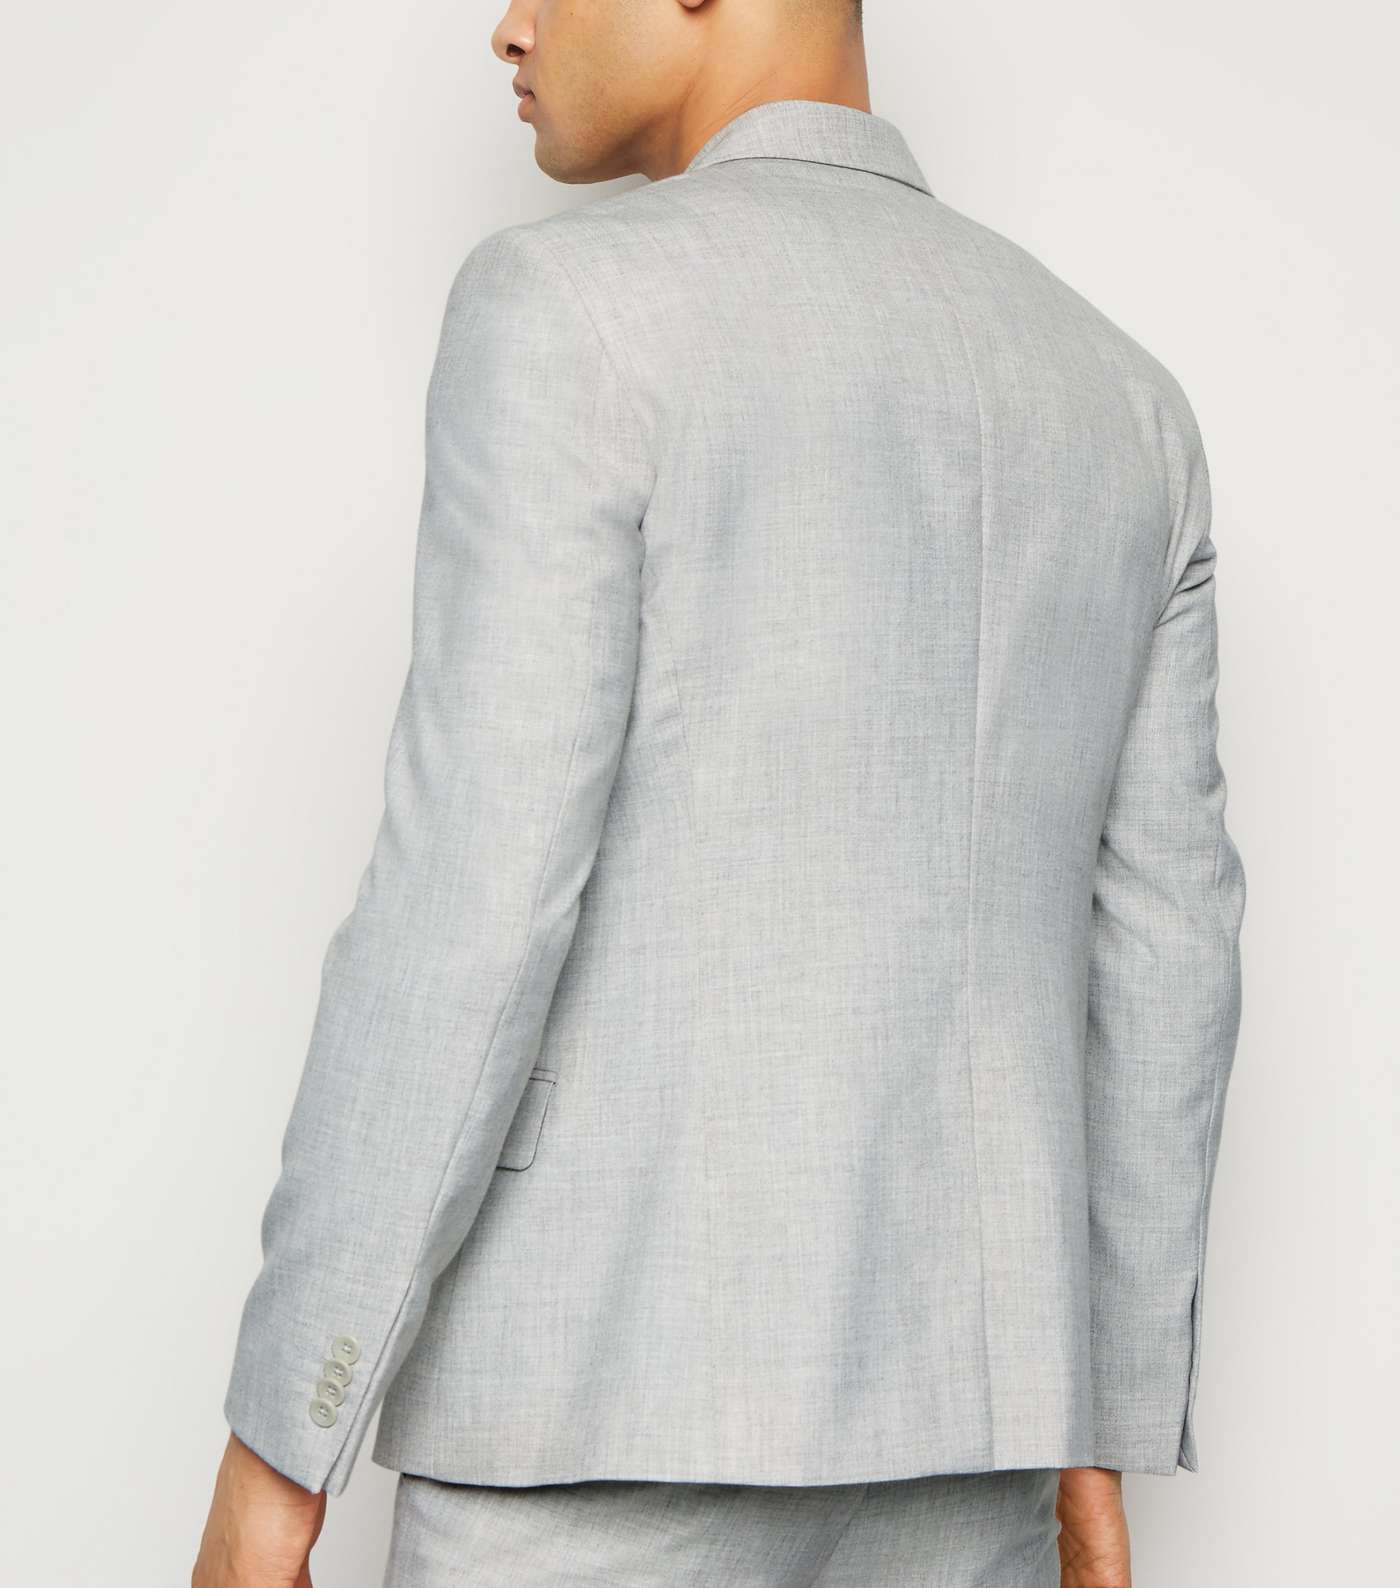 Light Grey Suit Jacket Image 3